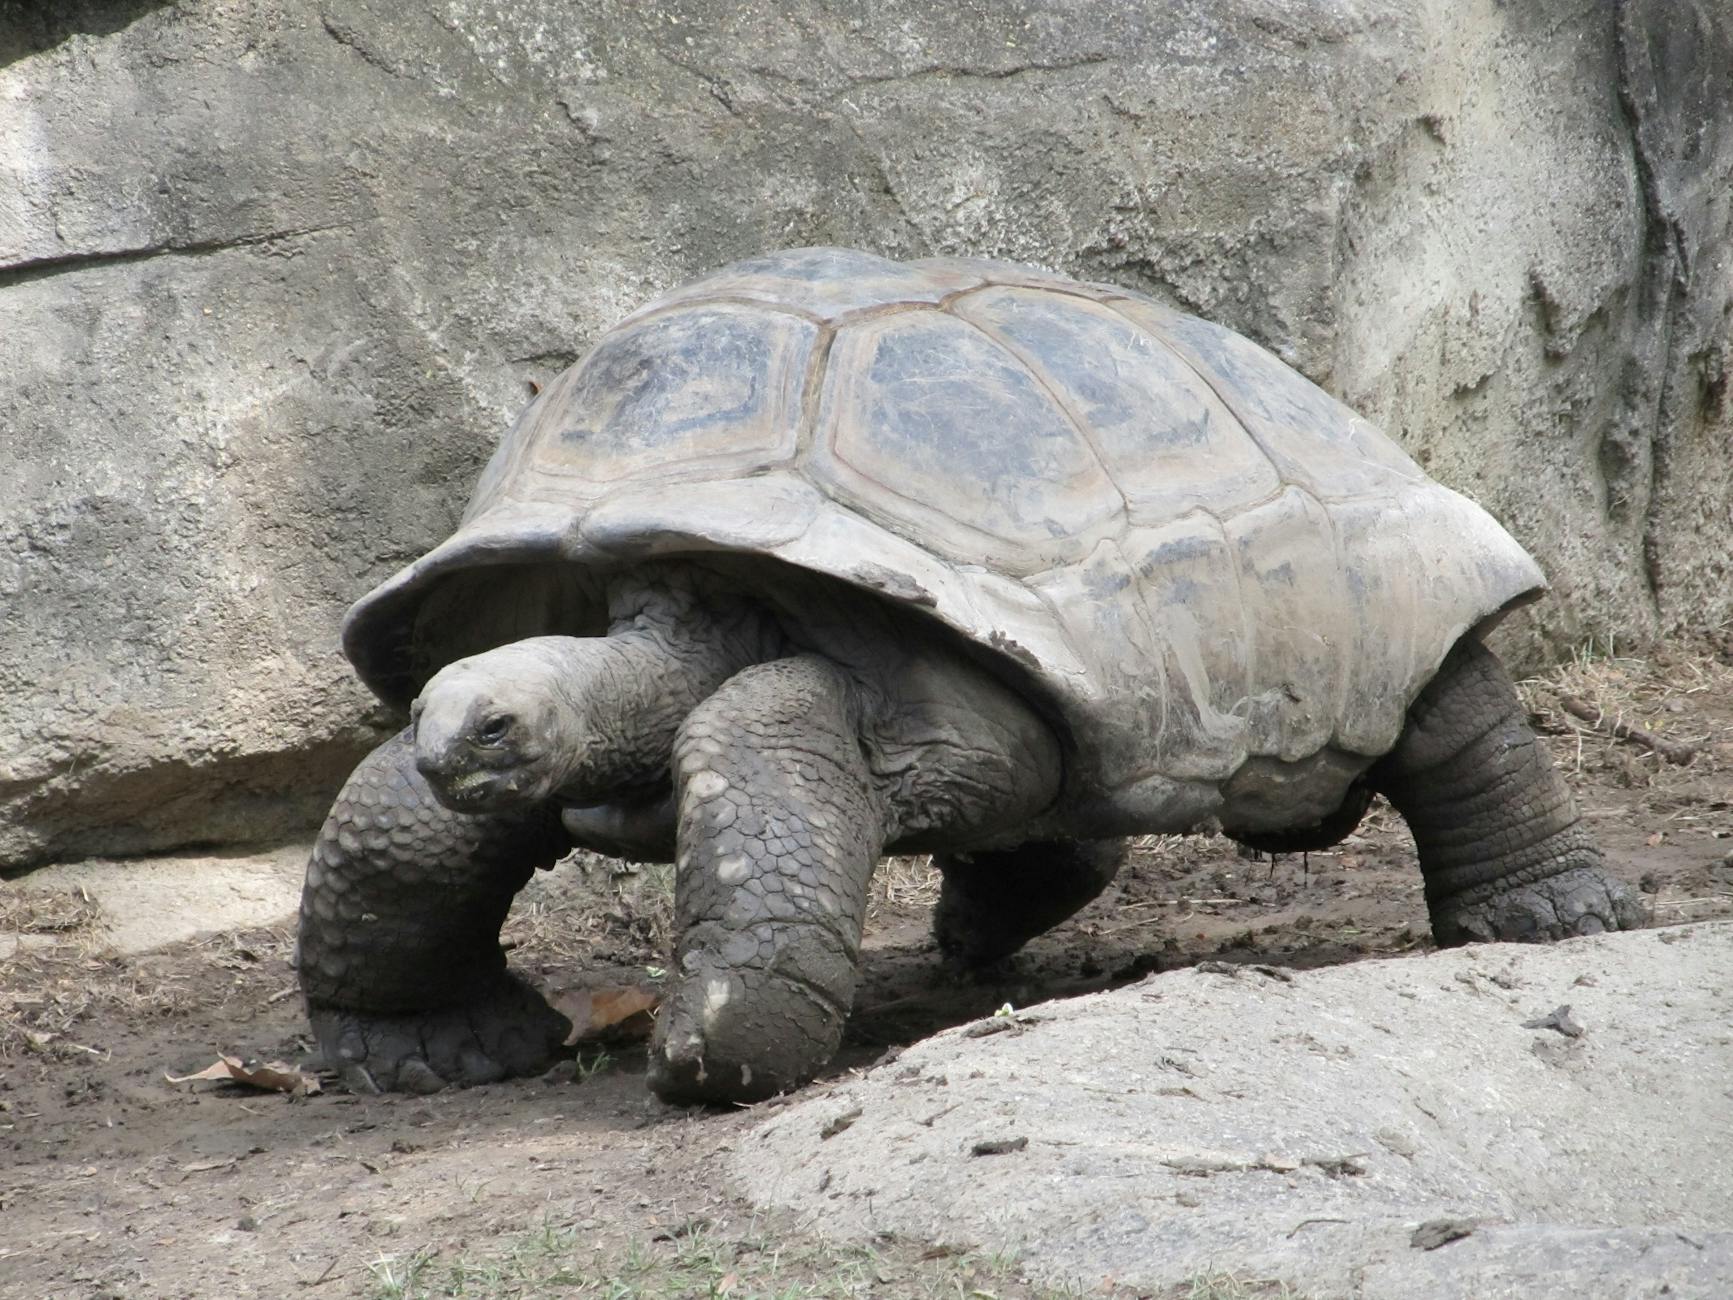 https://images.pexels.com/photos/162307/giant-tortoise-reptile-shell-walking-162307.jpeg?auto=compress&cs=tinysrgb&dpr=2&h=650&w=940